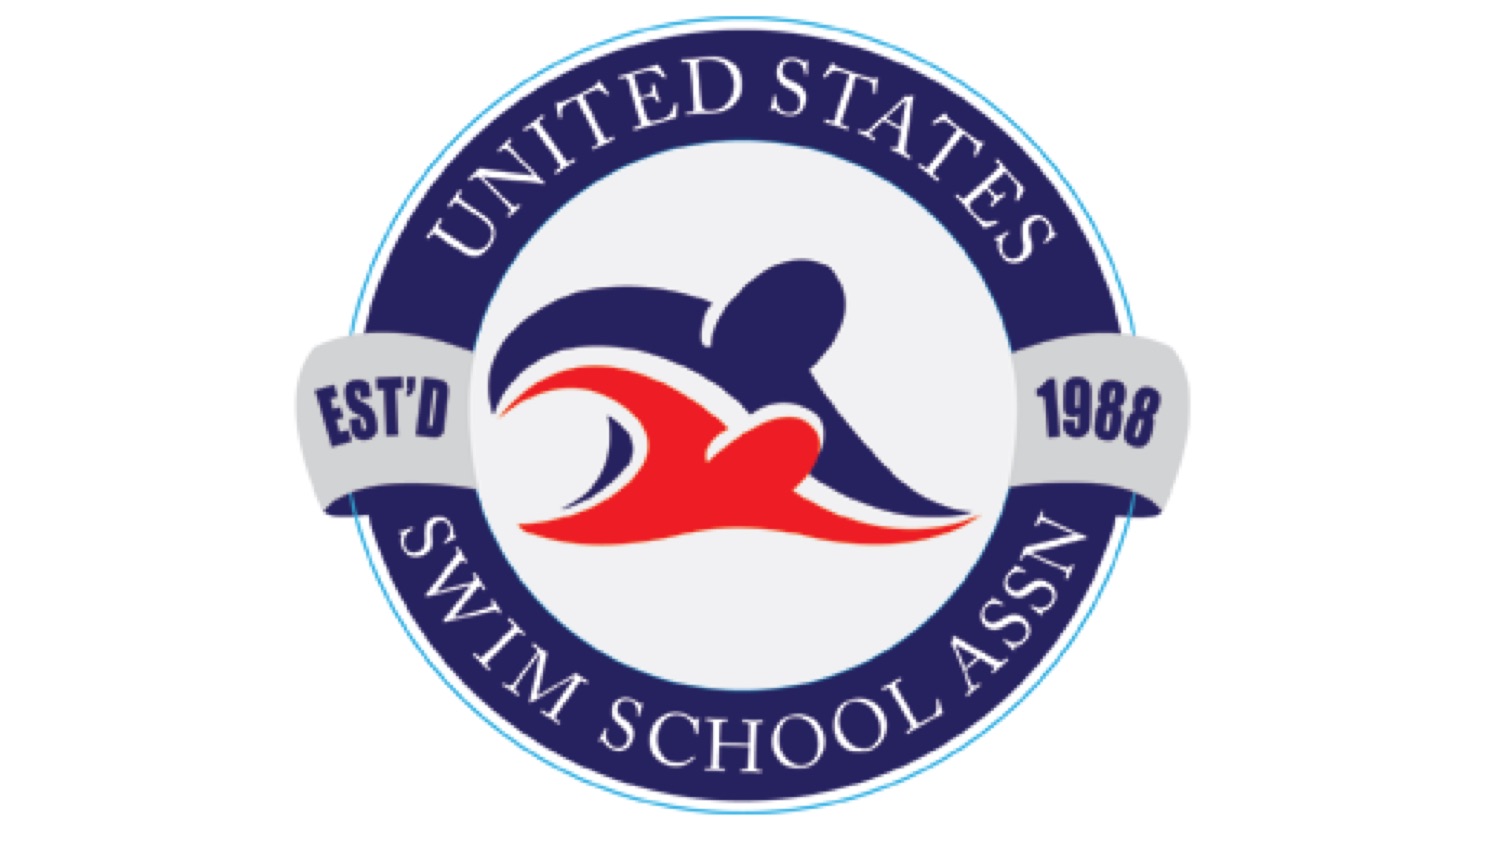 US Swim Schools National Conference